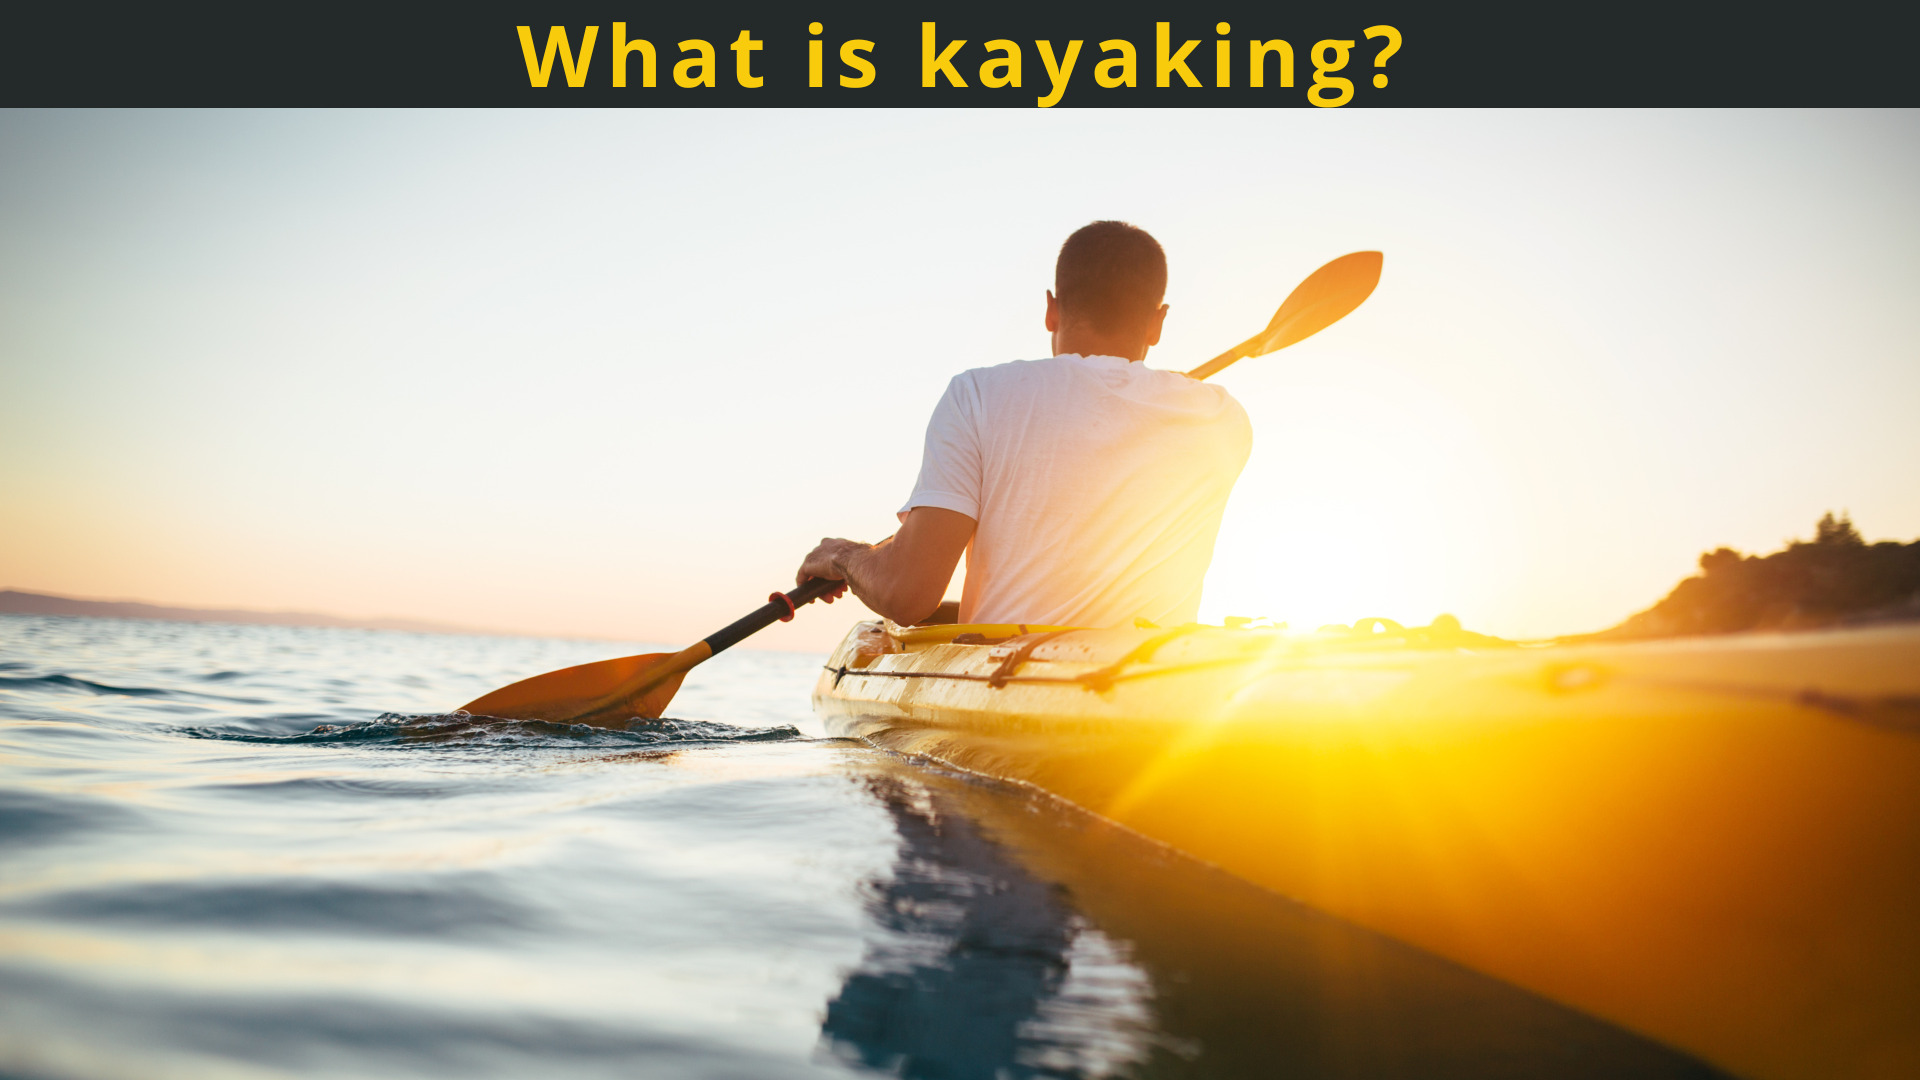 What is kayaking?